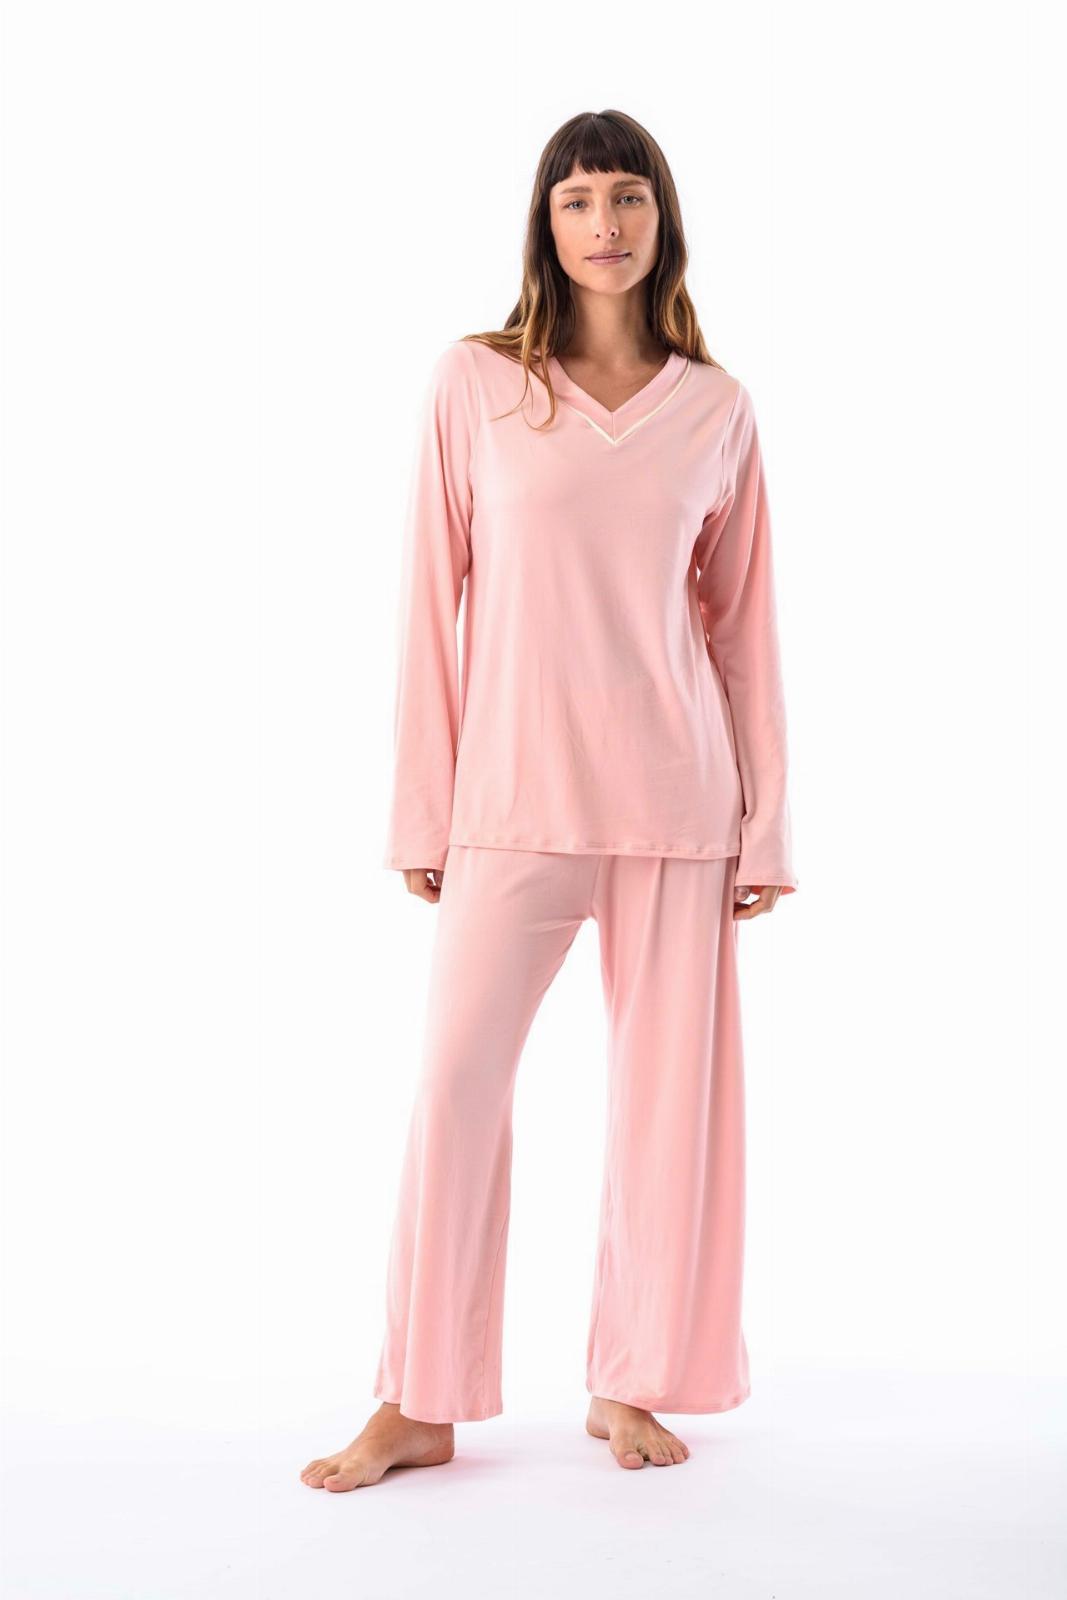 Cala - Pijama Manga Larga escote en V rosado s